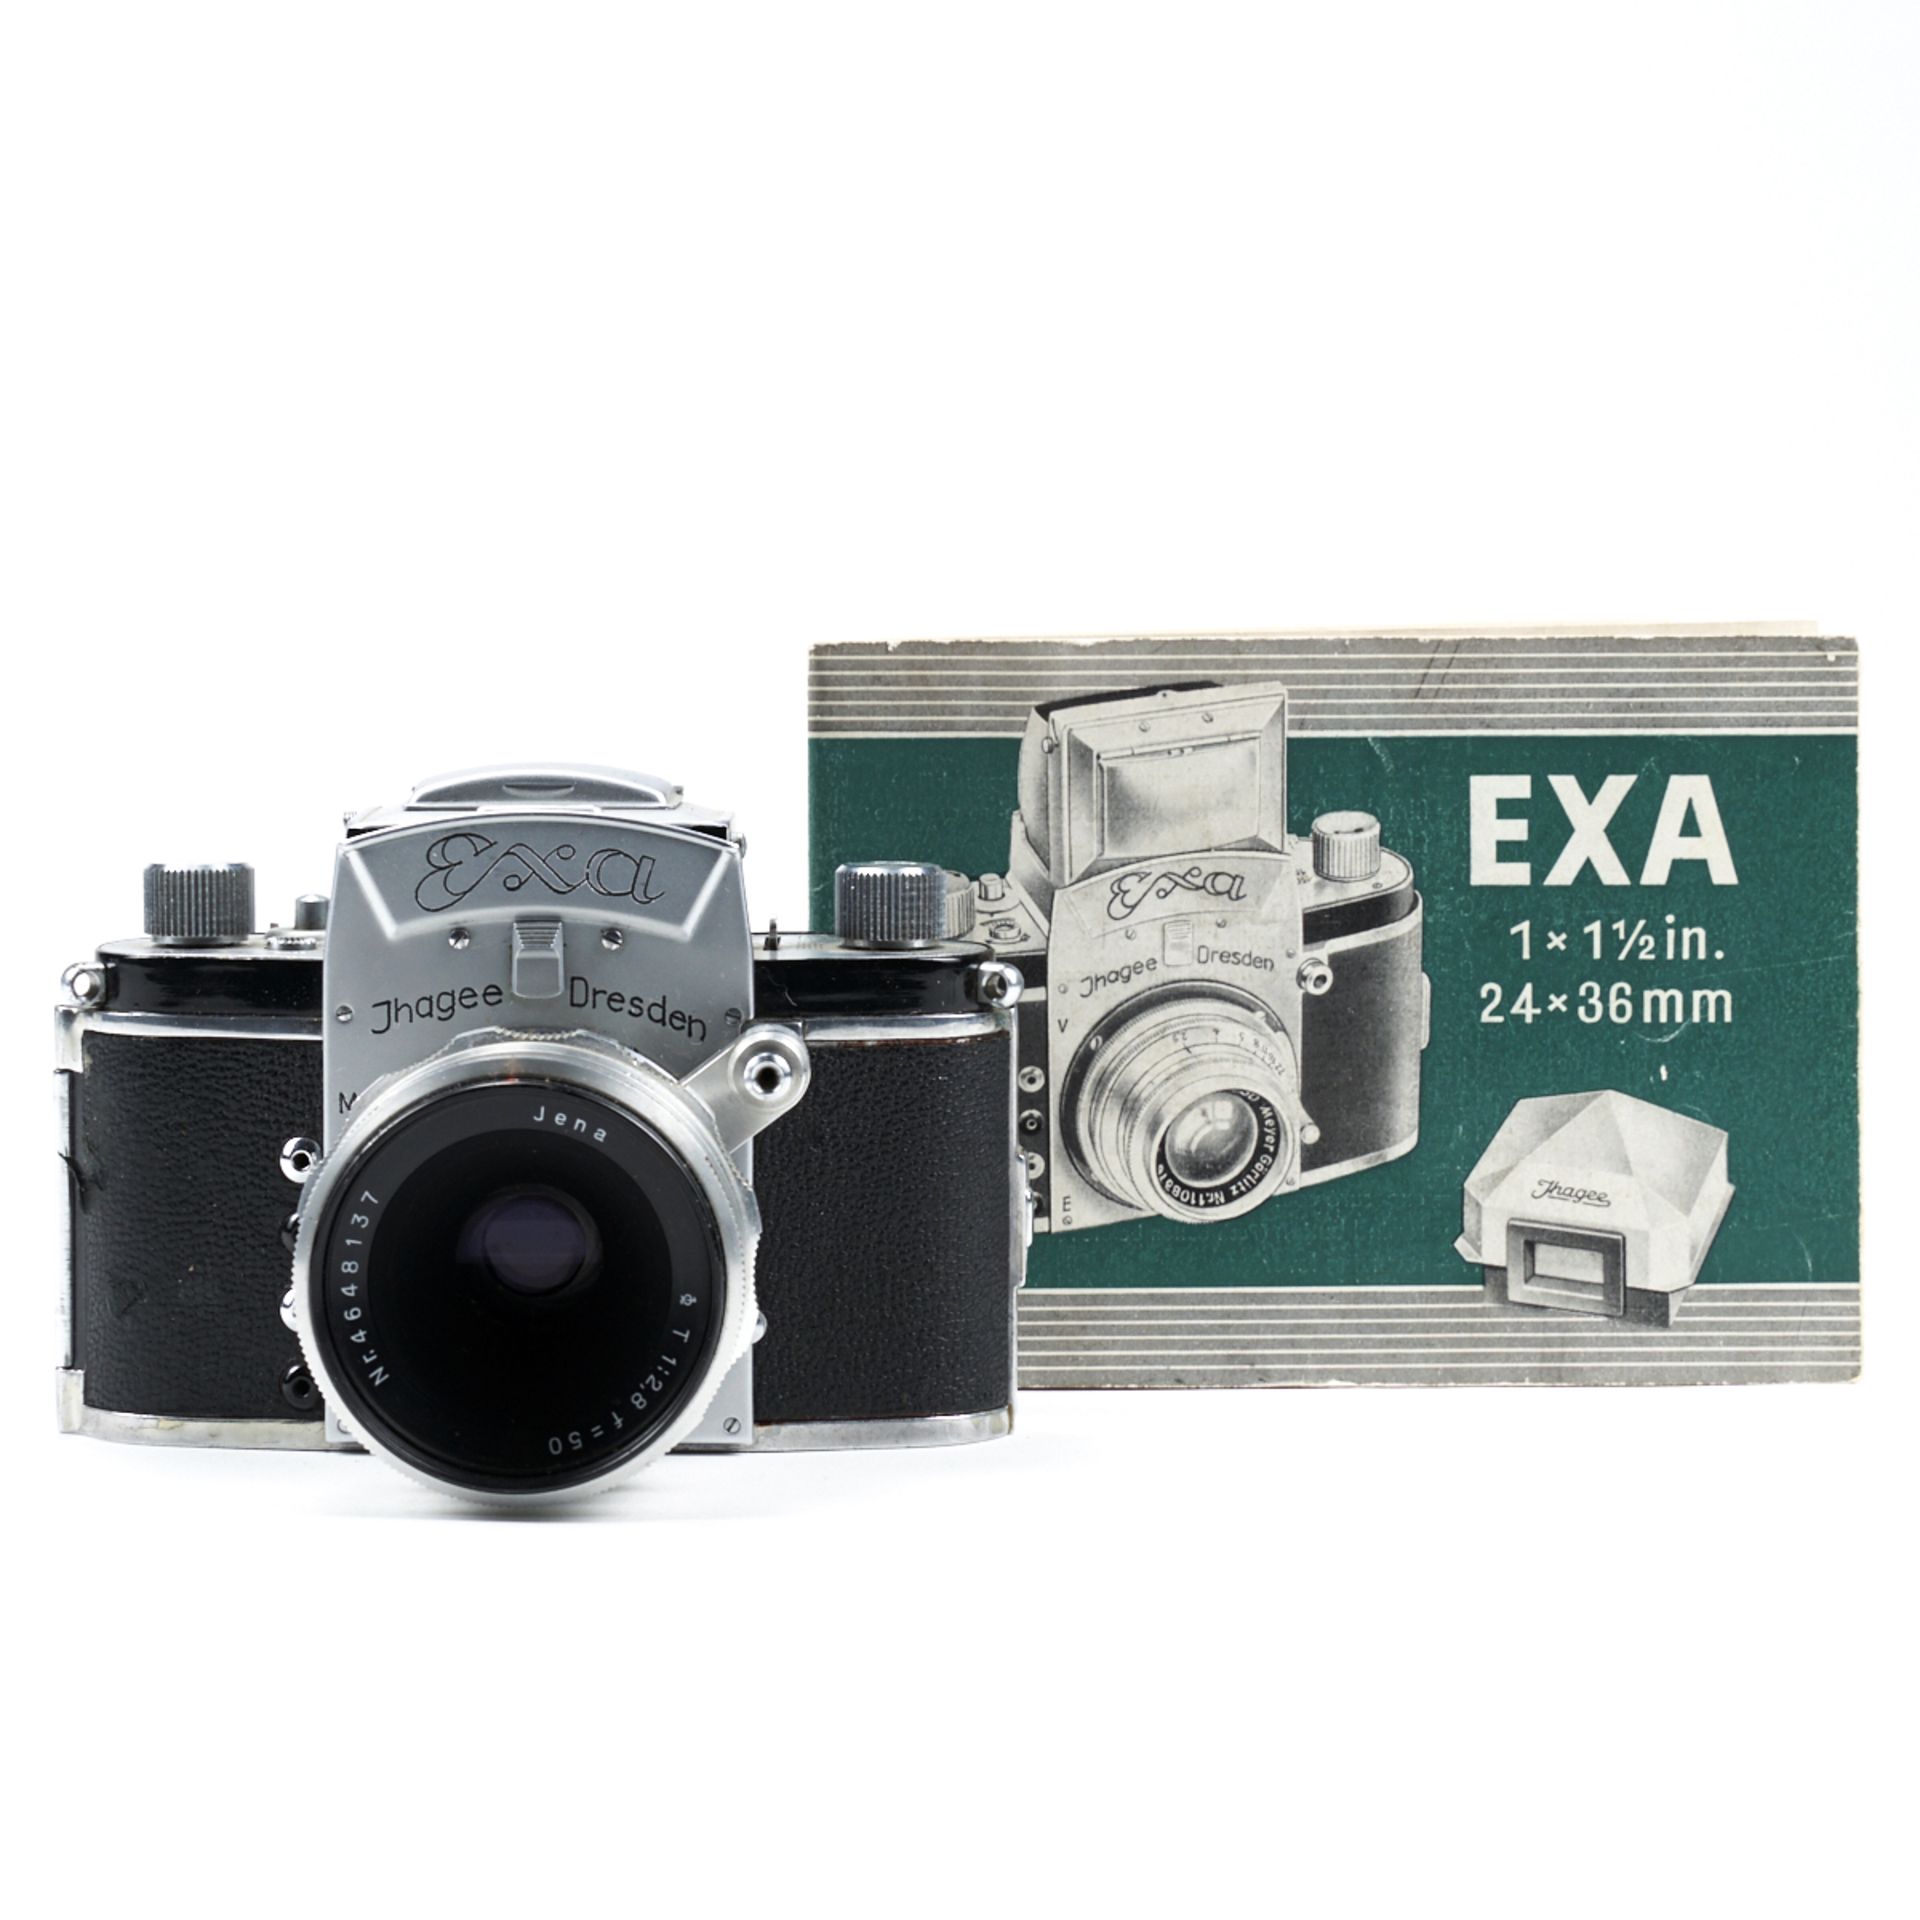 Grp: EXA 35mm Camera Body & Guide Book